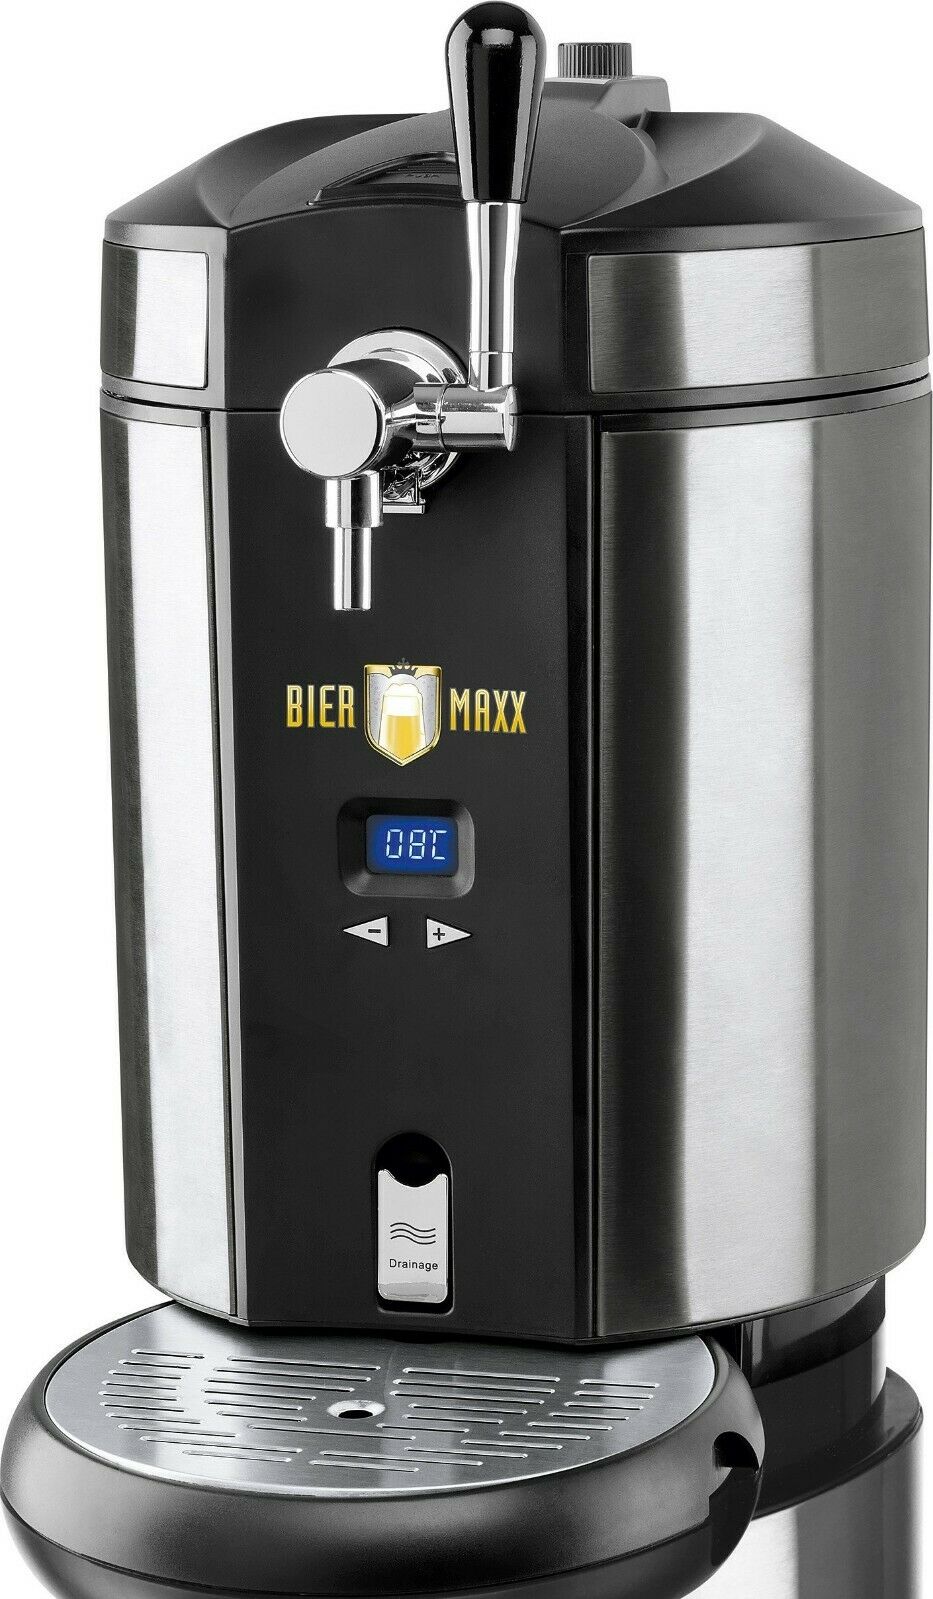 Beer dispenser Seal for royal catering, Klarstein machines UK STOCK